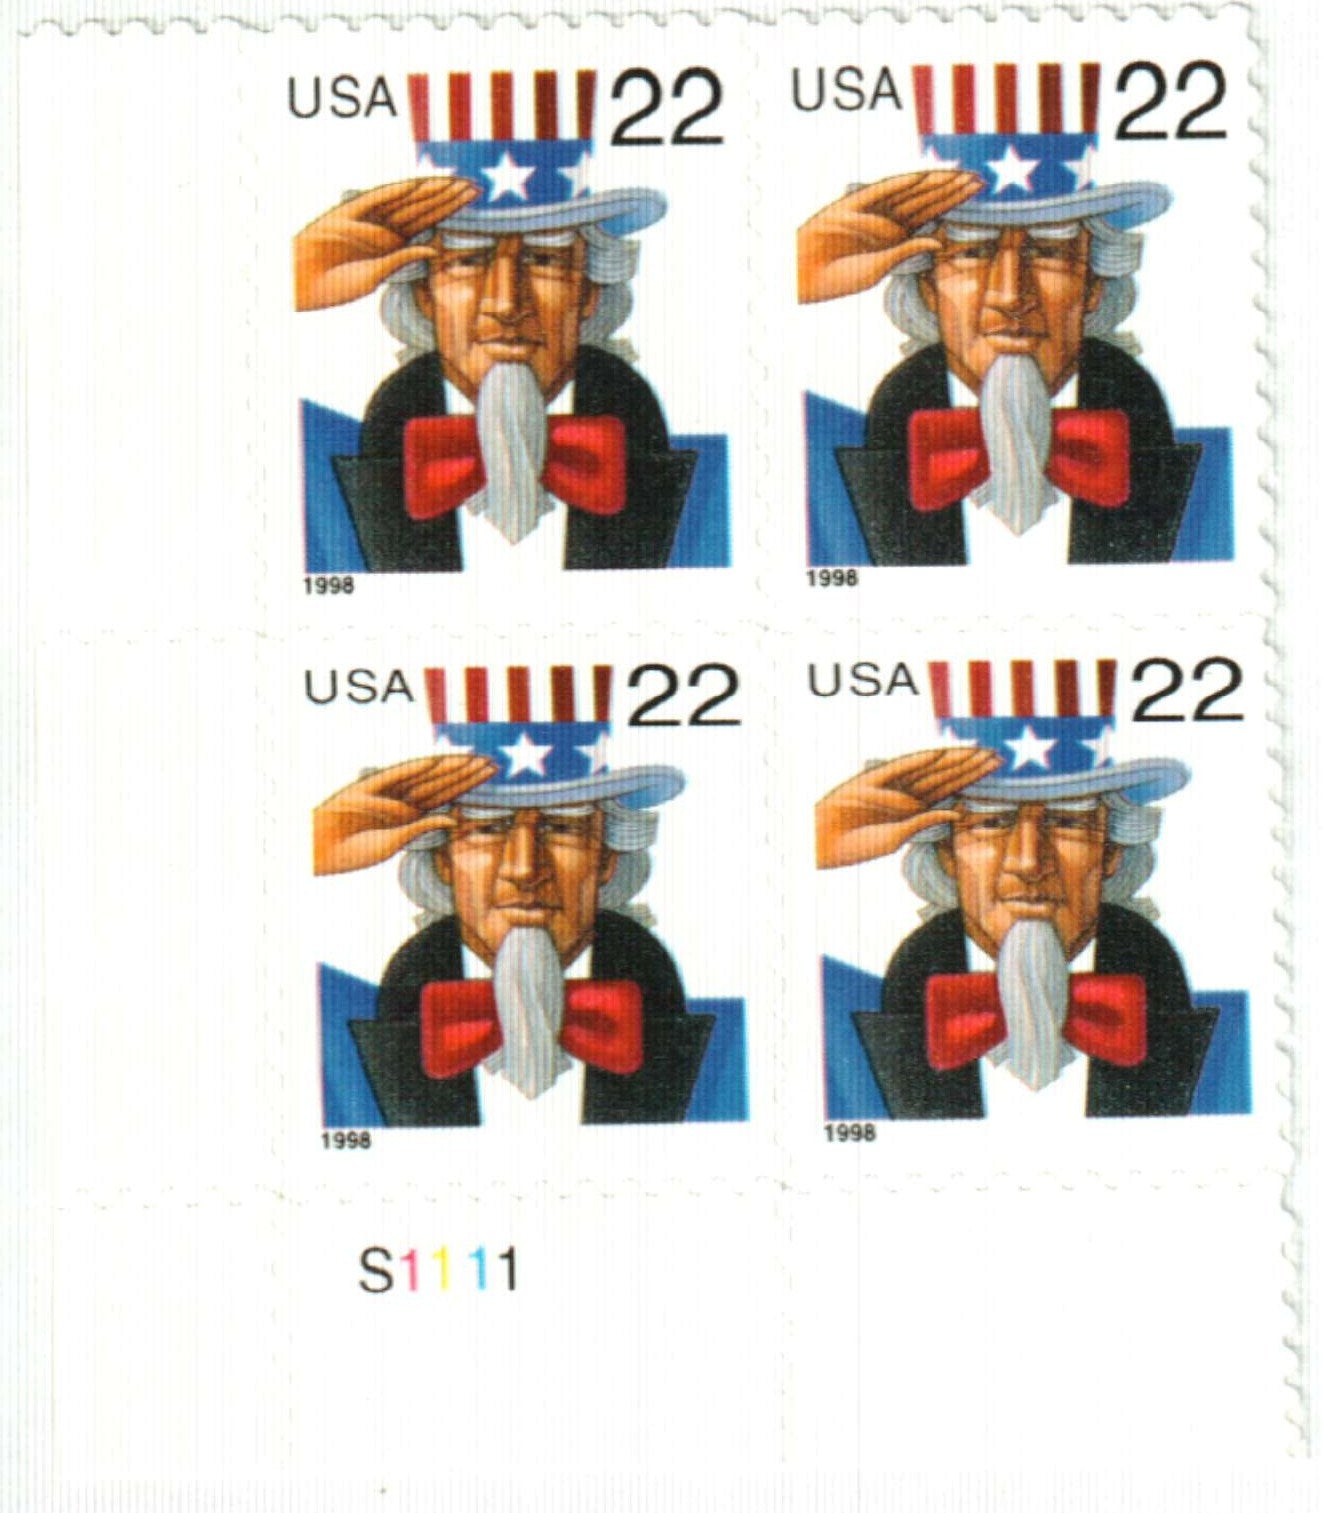 1998 US Uncle Sam Postage Stamps